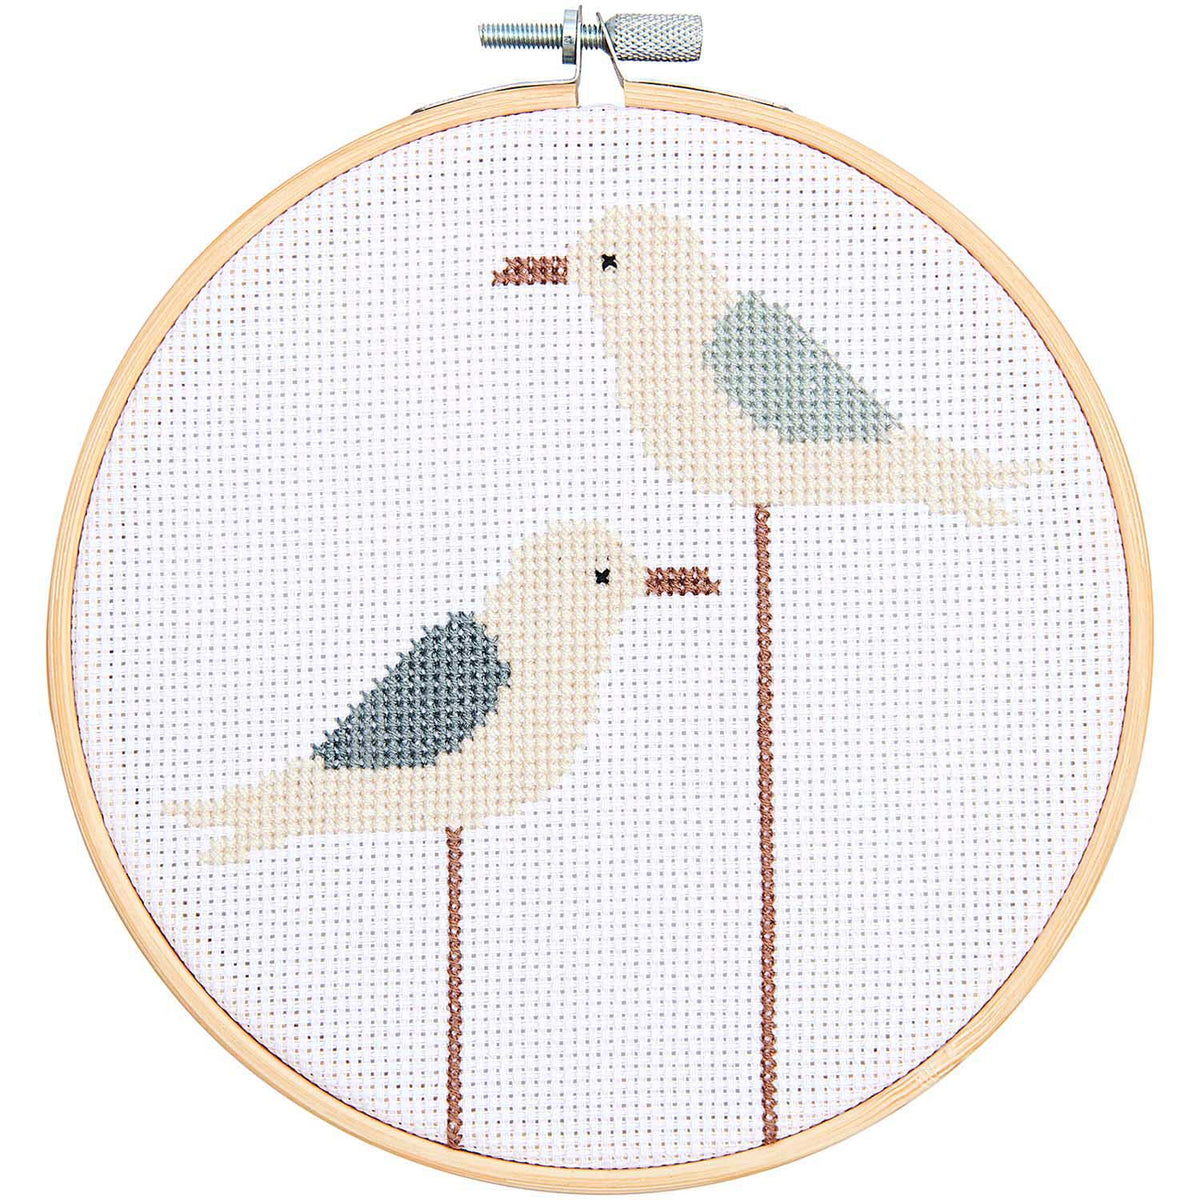 Seagulls Cross Stitch Kit